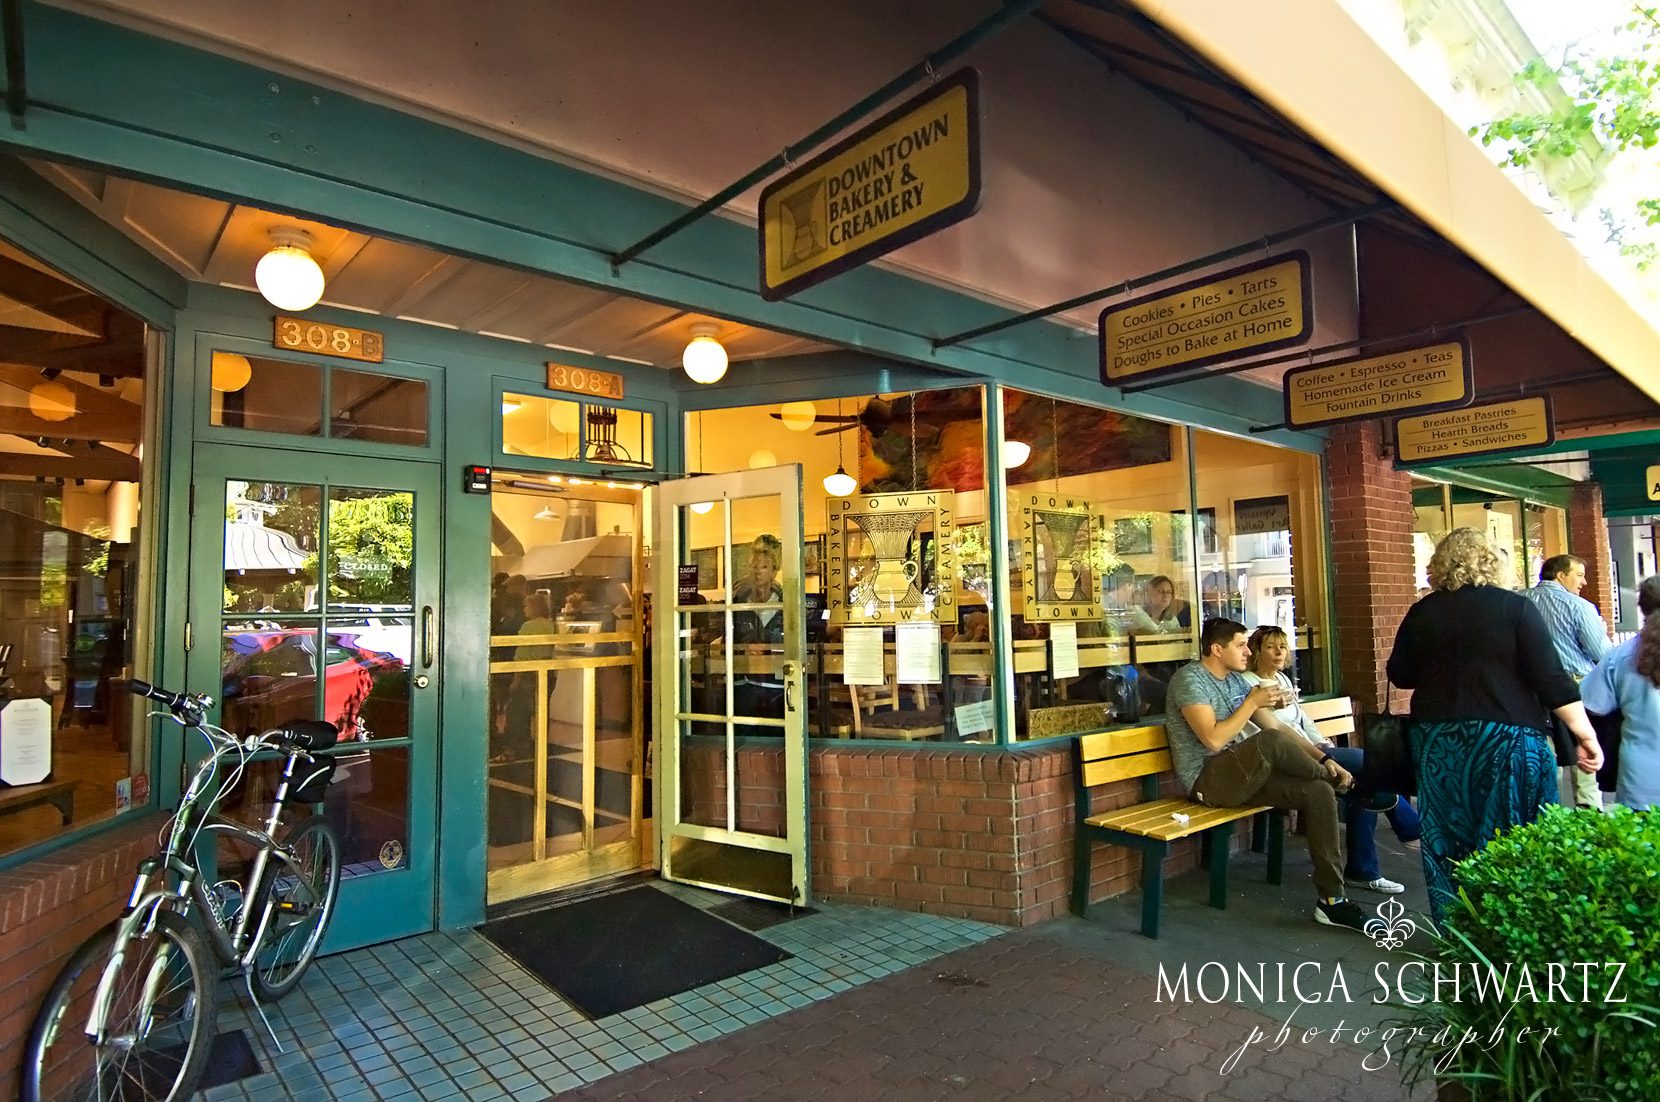 Downtown-Bakery-and-Creamery-in-Healdsburg-California